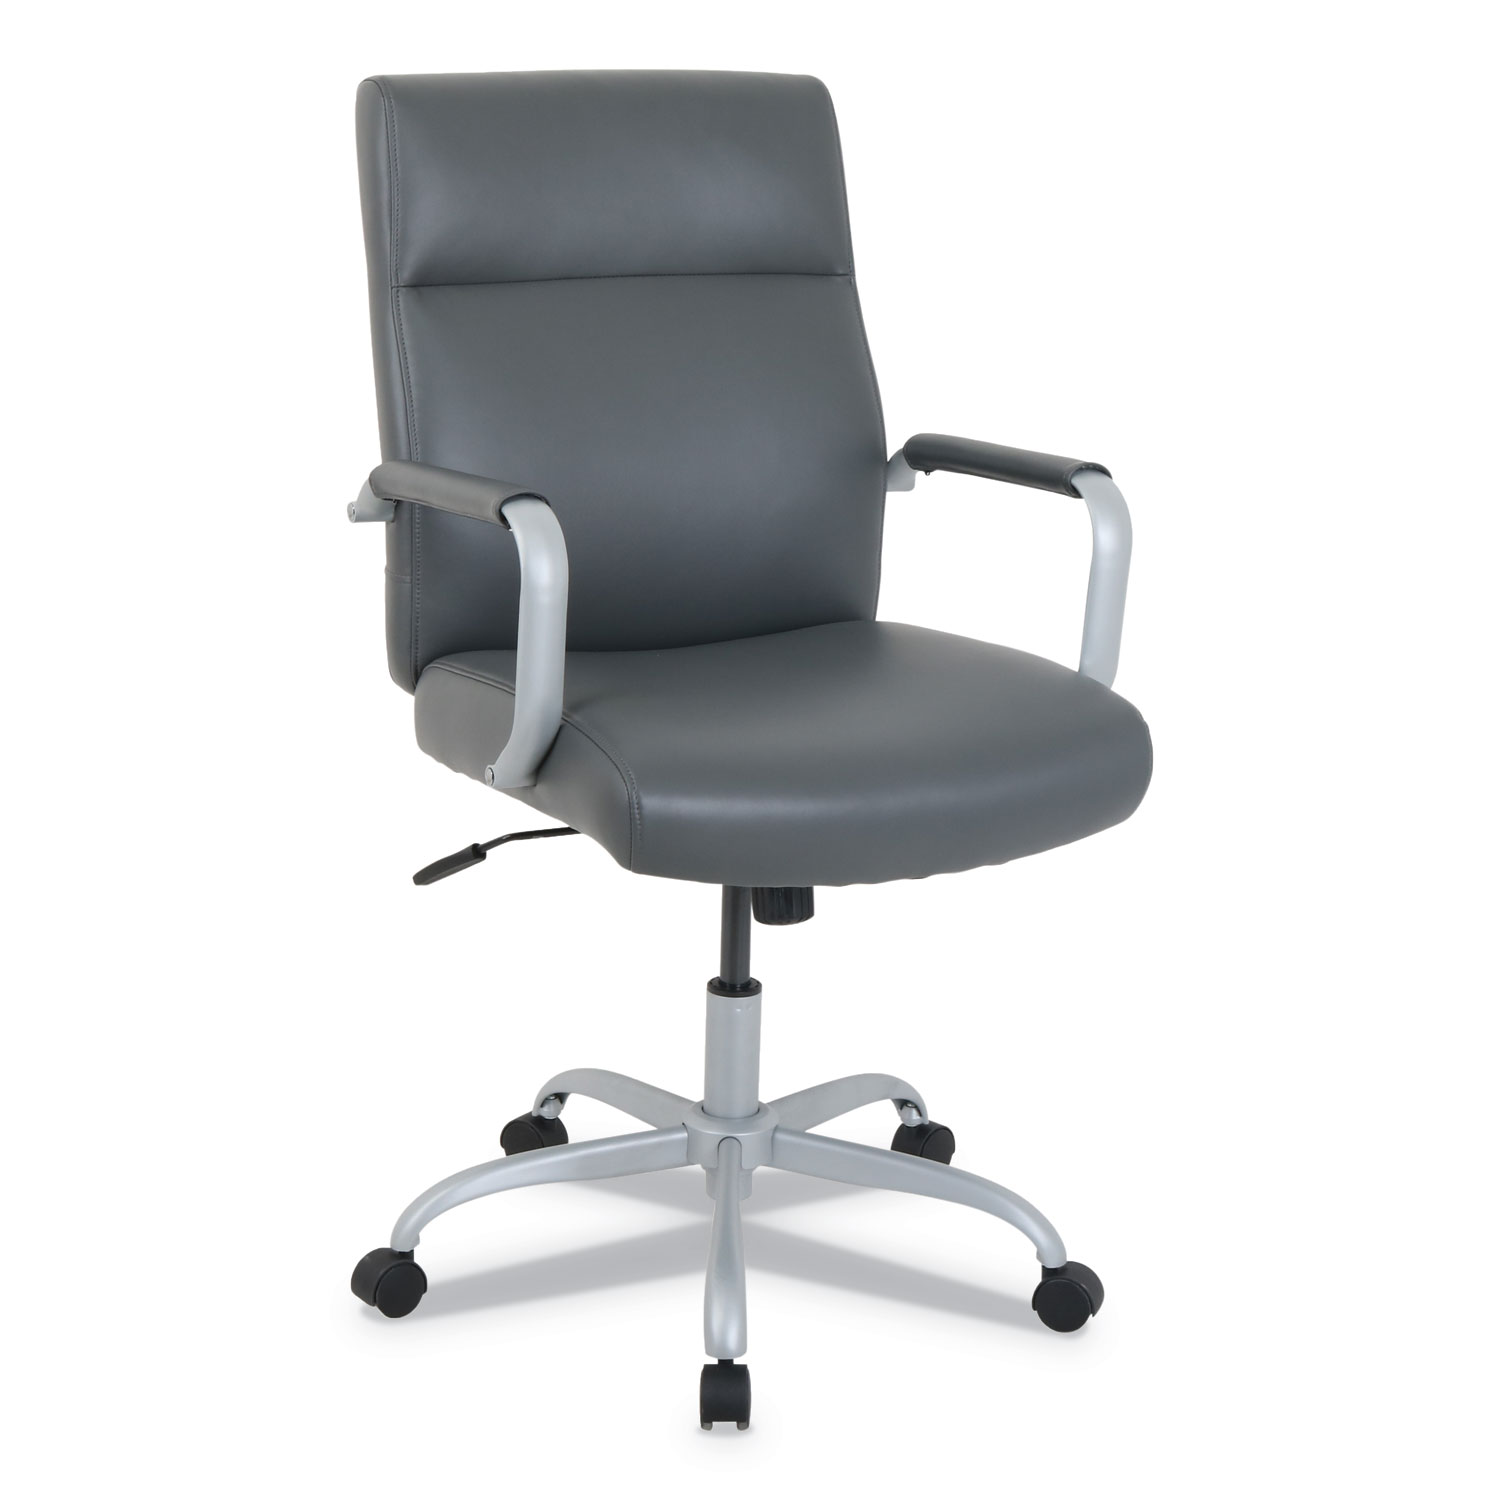  Alera KA24149 kathy ireland OFFICE by Alera Manitou High-Back Leather Office Chair, Up to 275 lbs., Gray Seat/Back, Smoking Gray Base (ALEKA24149) 